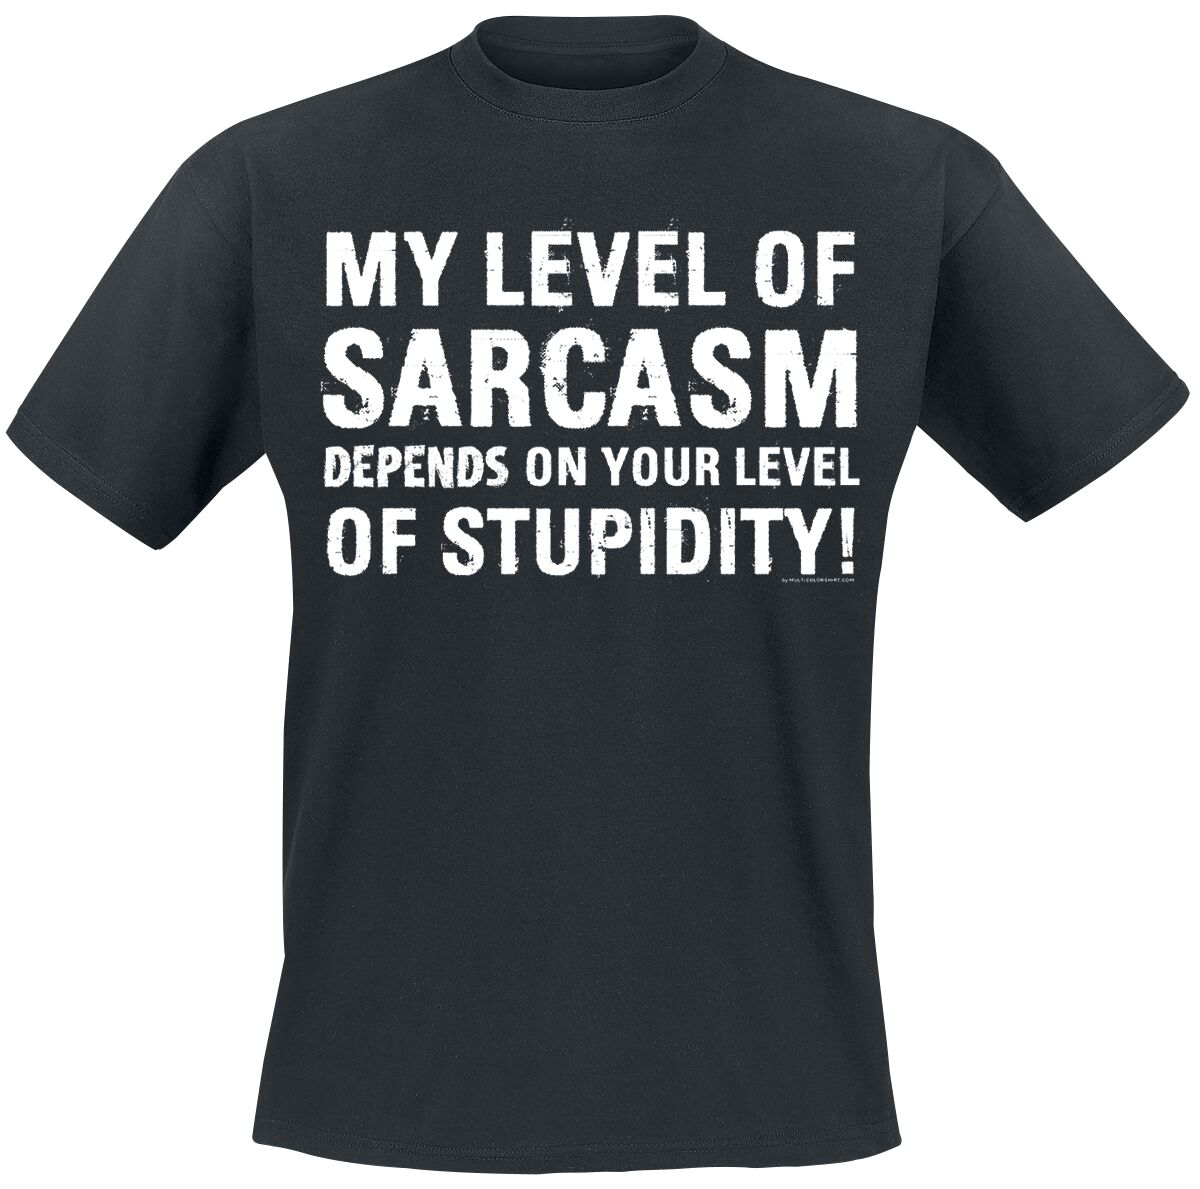 Sprüche My Level Of Sarcasm Depends On Your Level Of Stupidity! T-Shirt schwarz in XXL